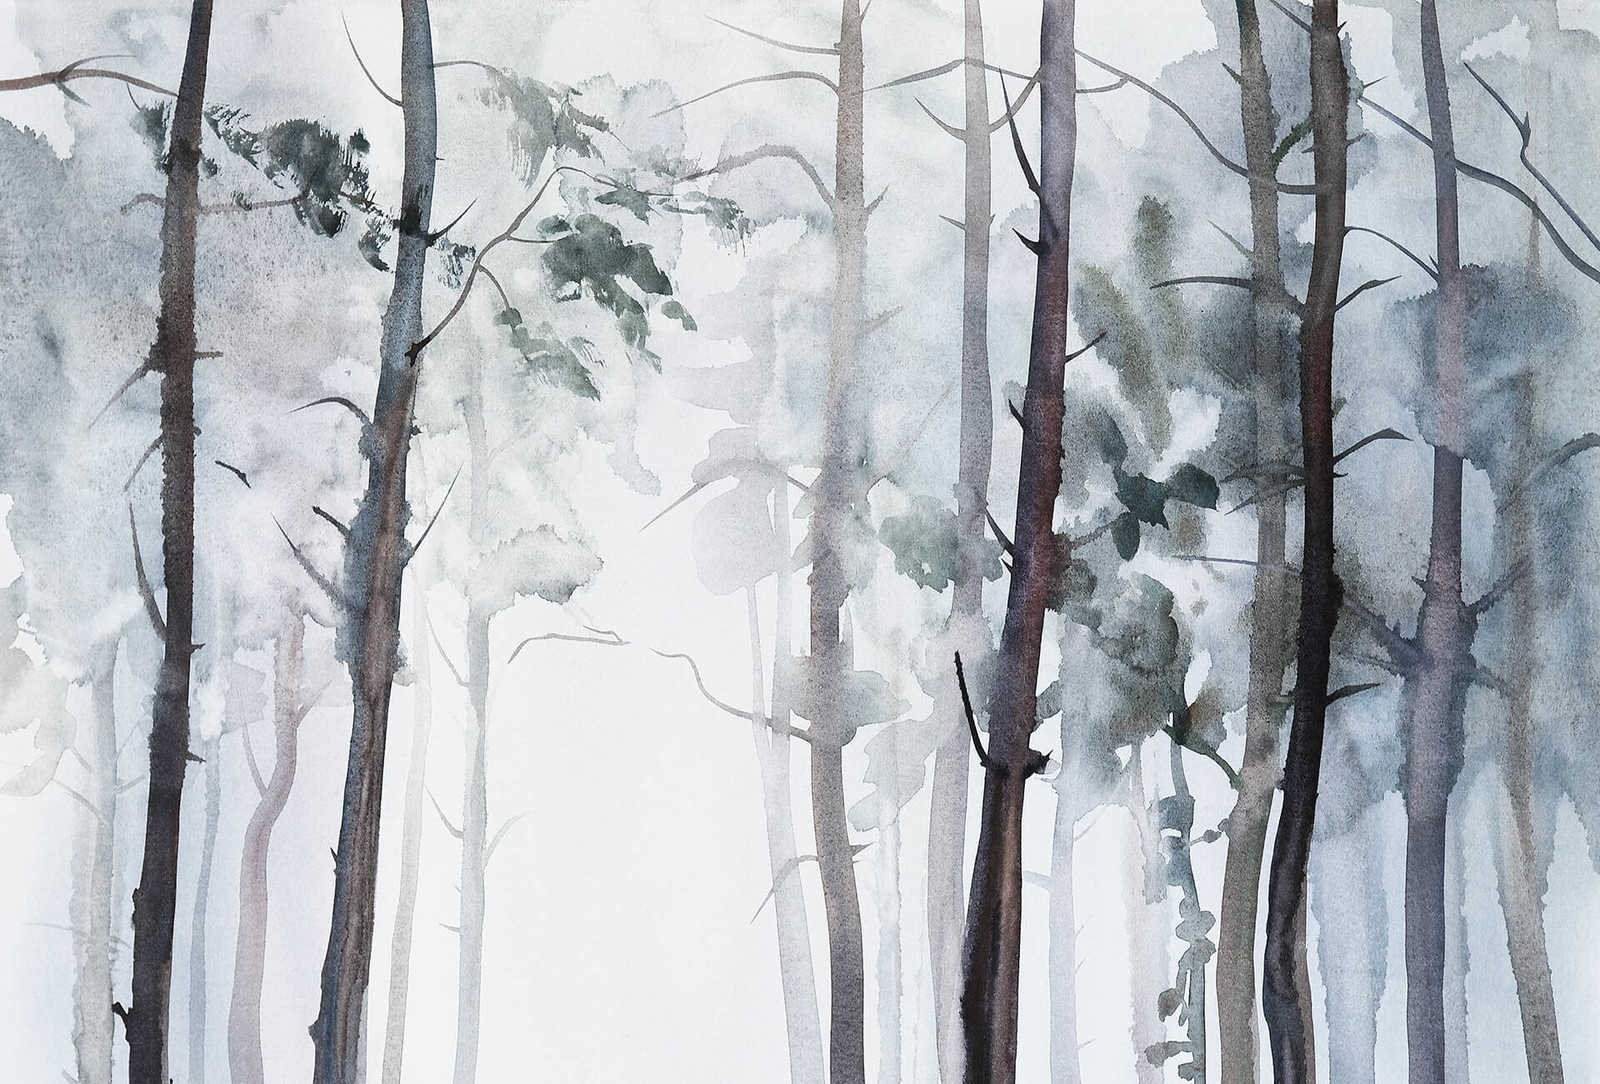 Fototapete nebeliger Wald – Blau, Grau, Weiß
